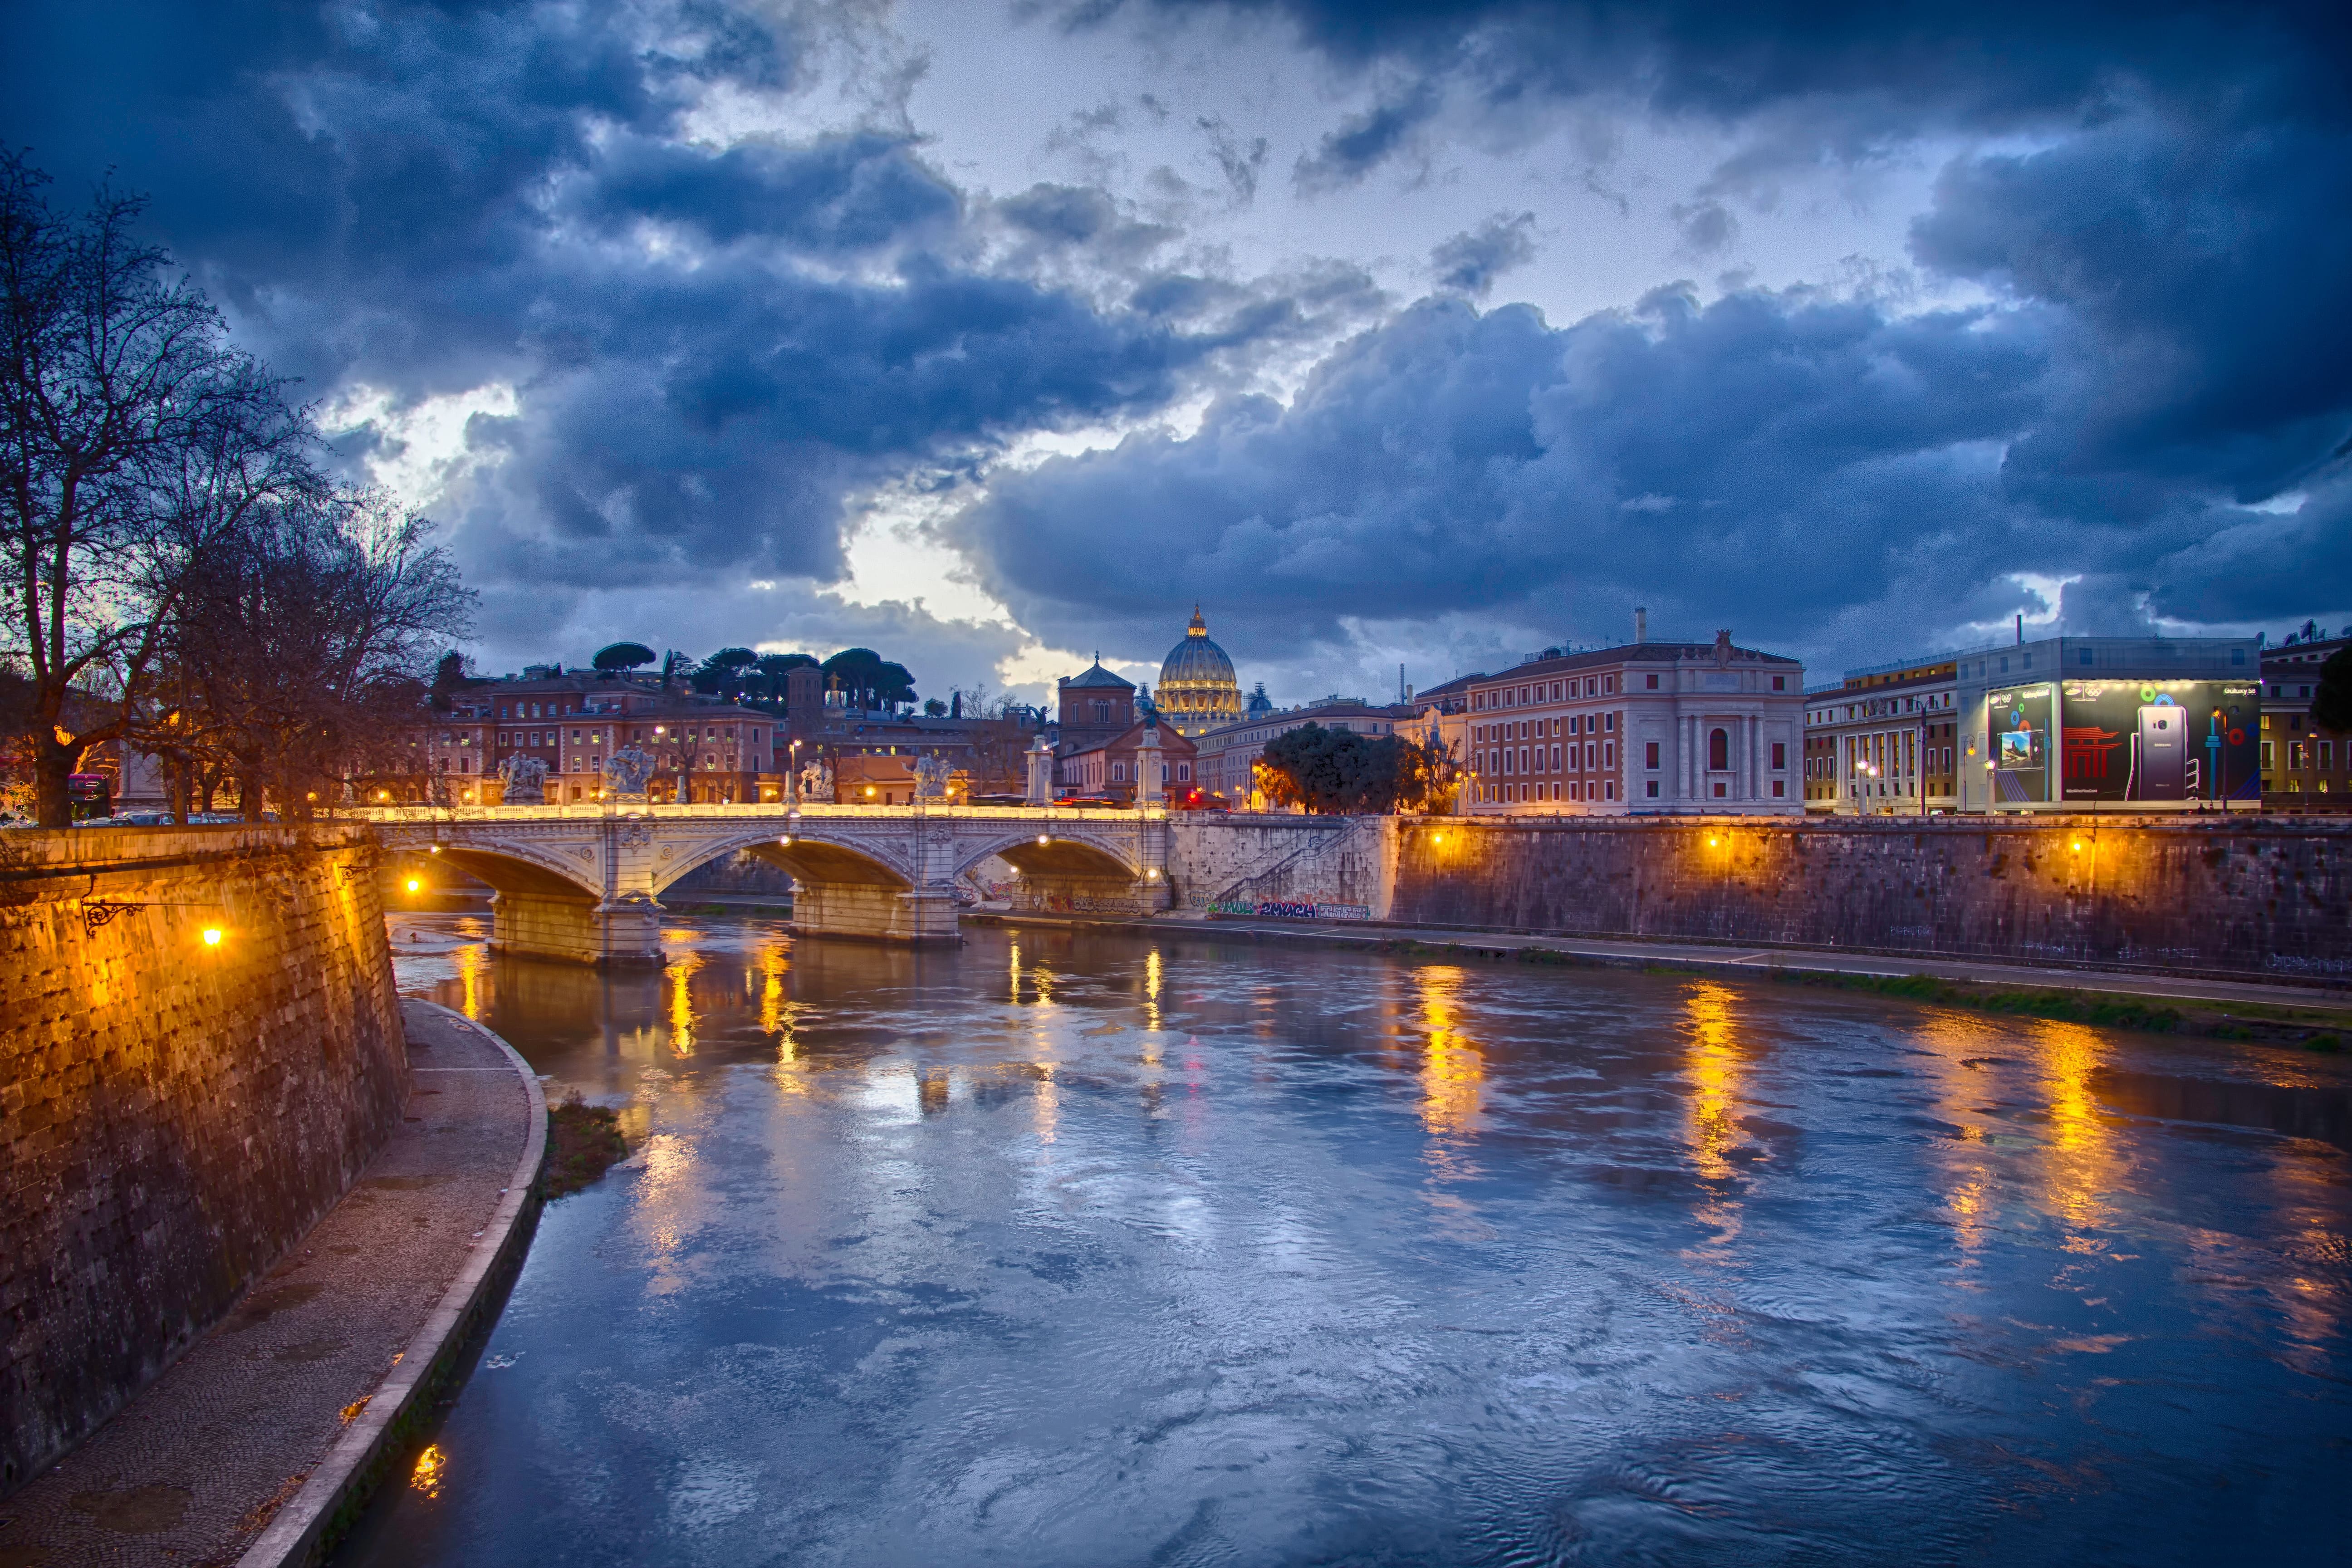 Tiber River and bridge in Rome